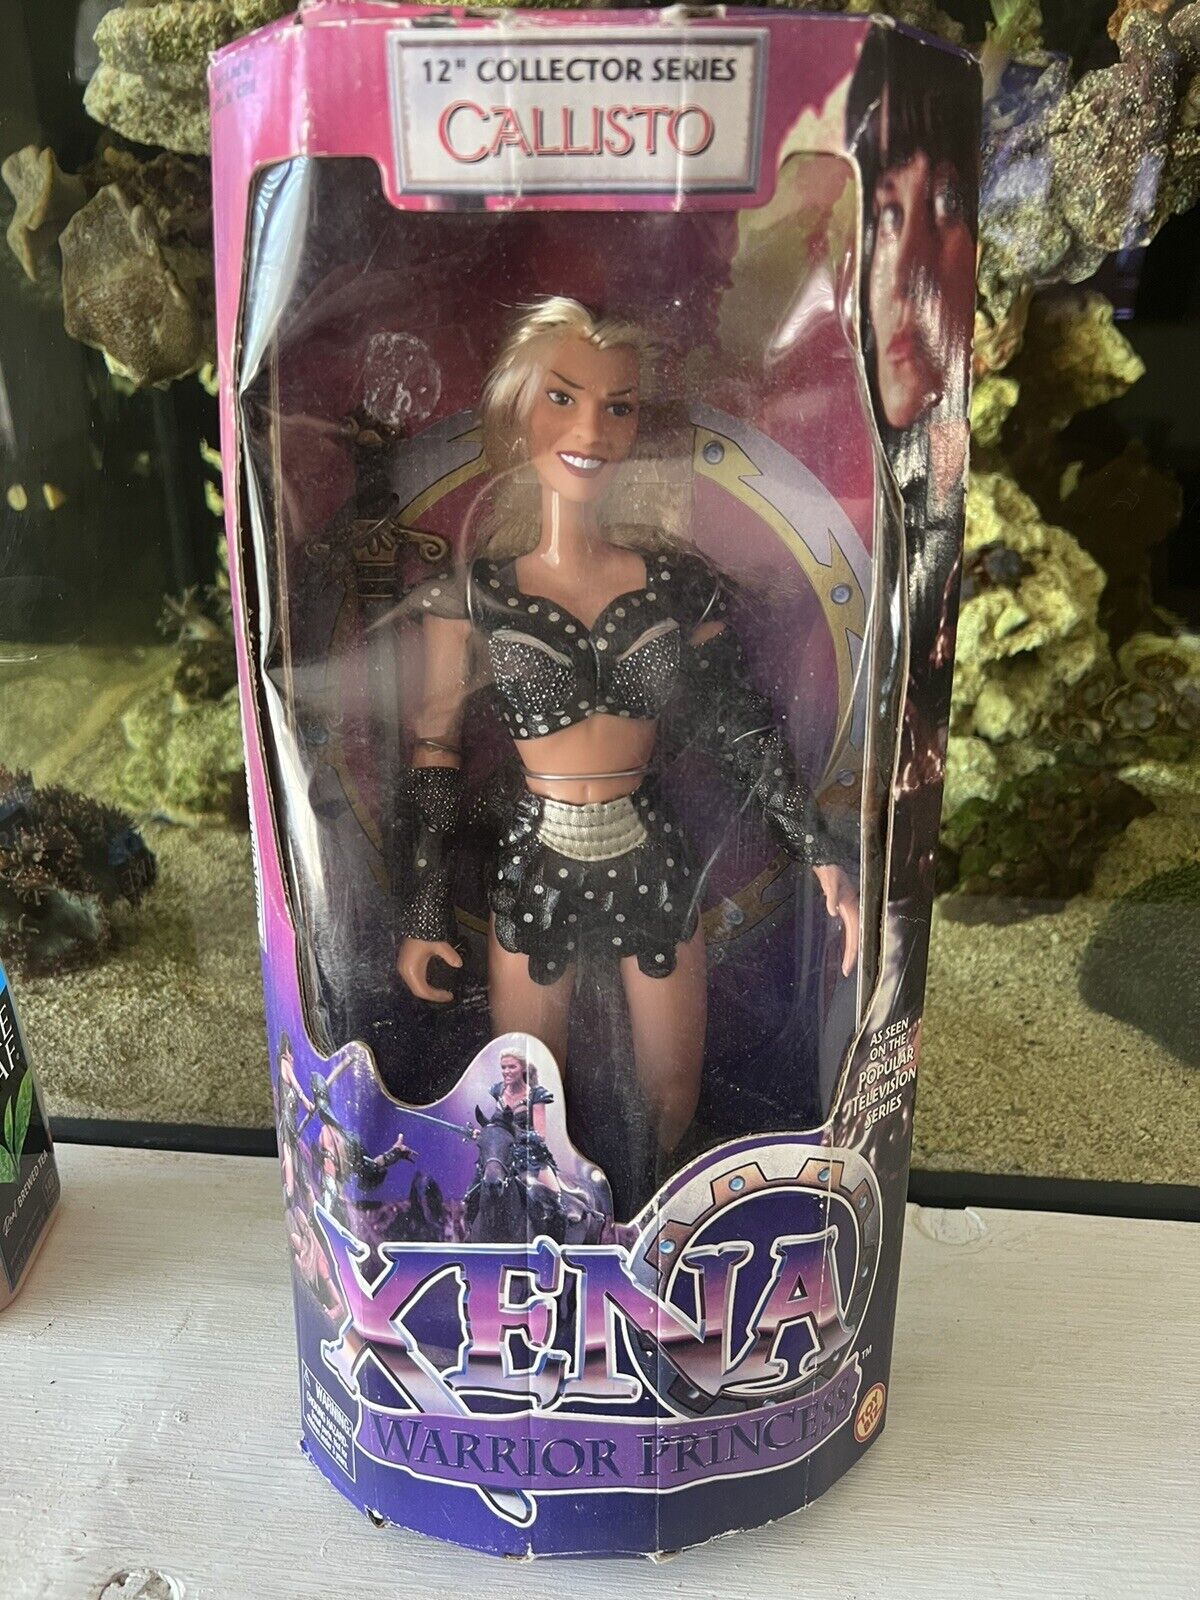 Xena Warrior Princess - Callisto 12” Collector Series Doll in Box - Toy Biz￼